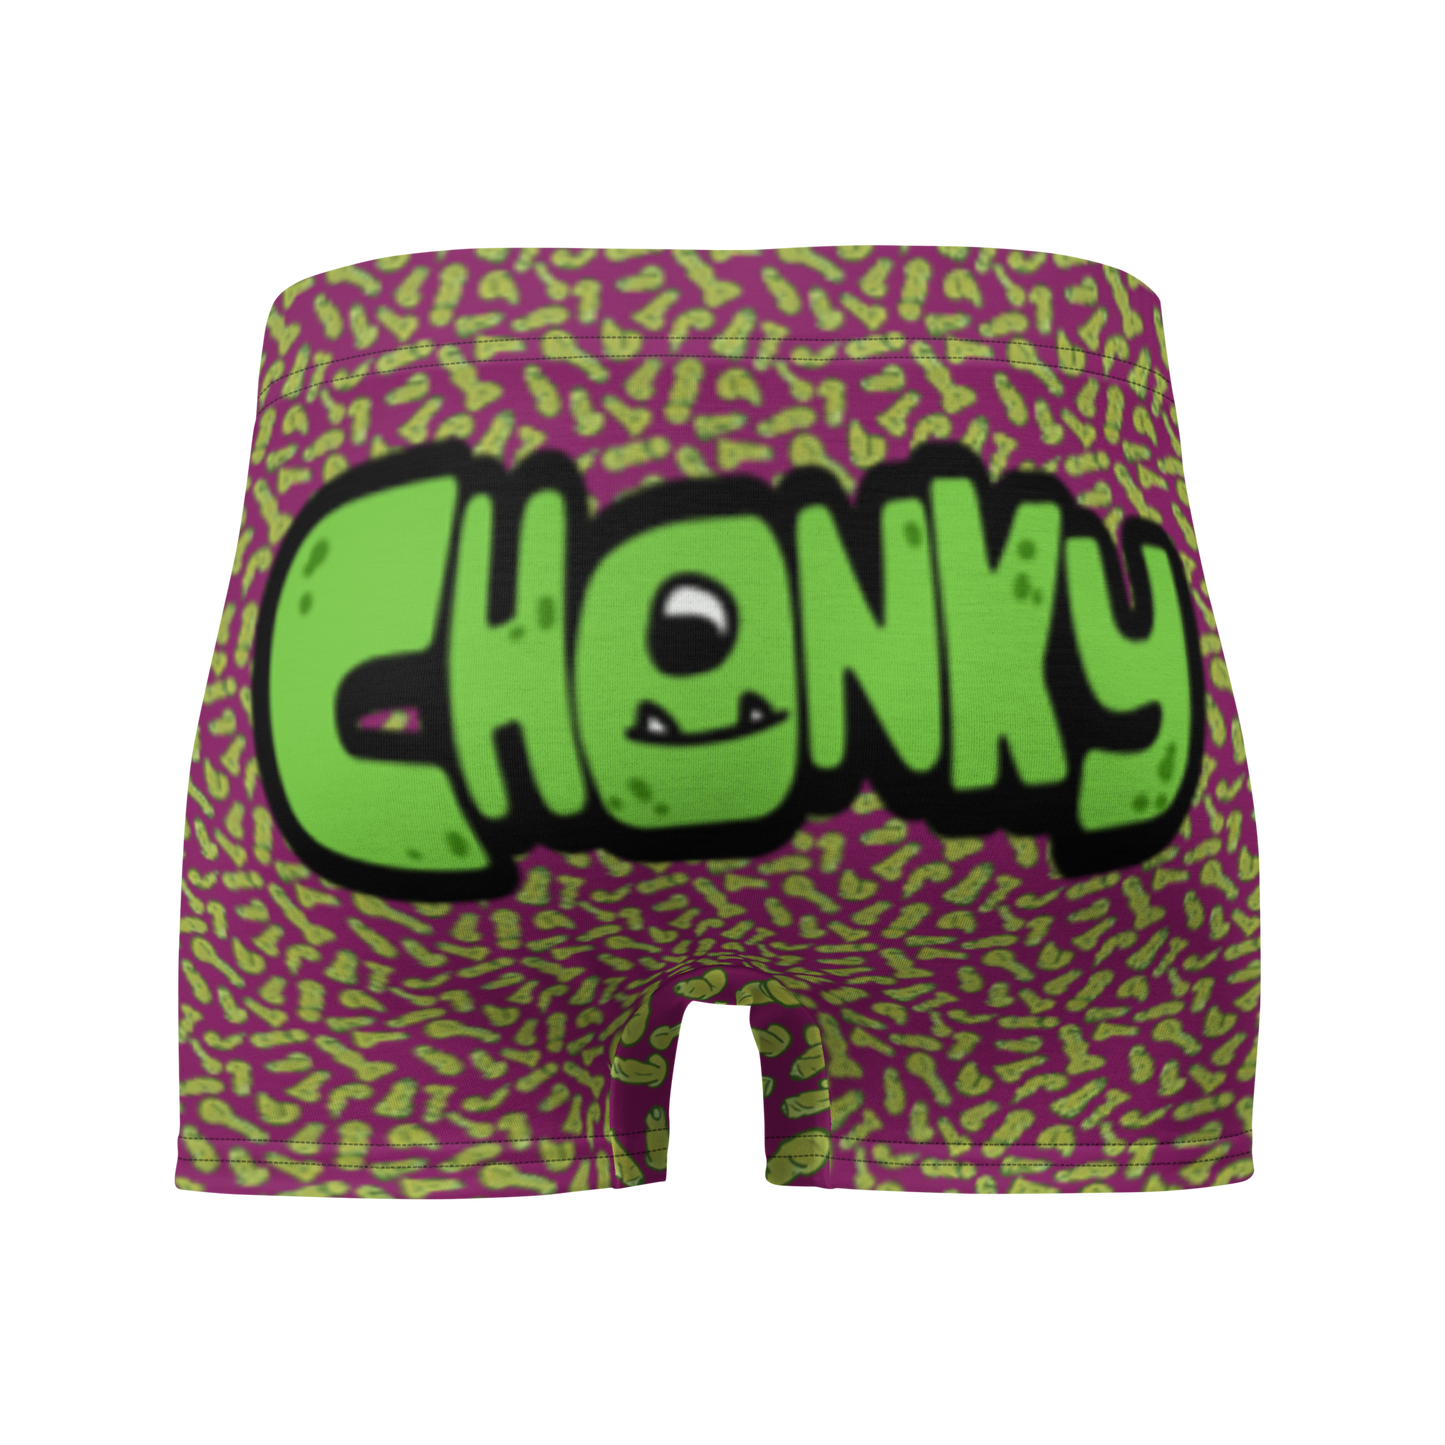 Chonky Boxer Briefs